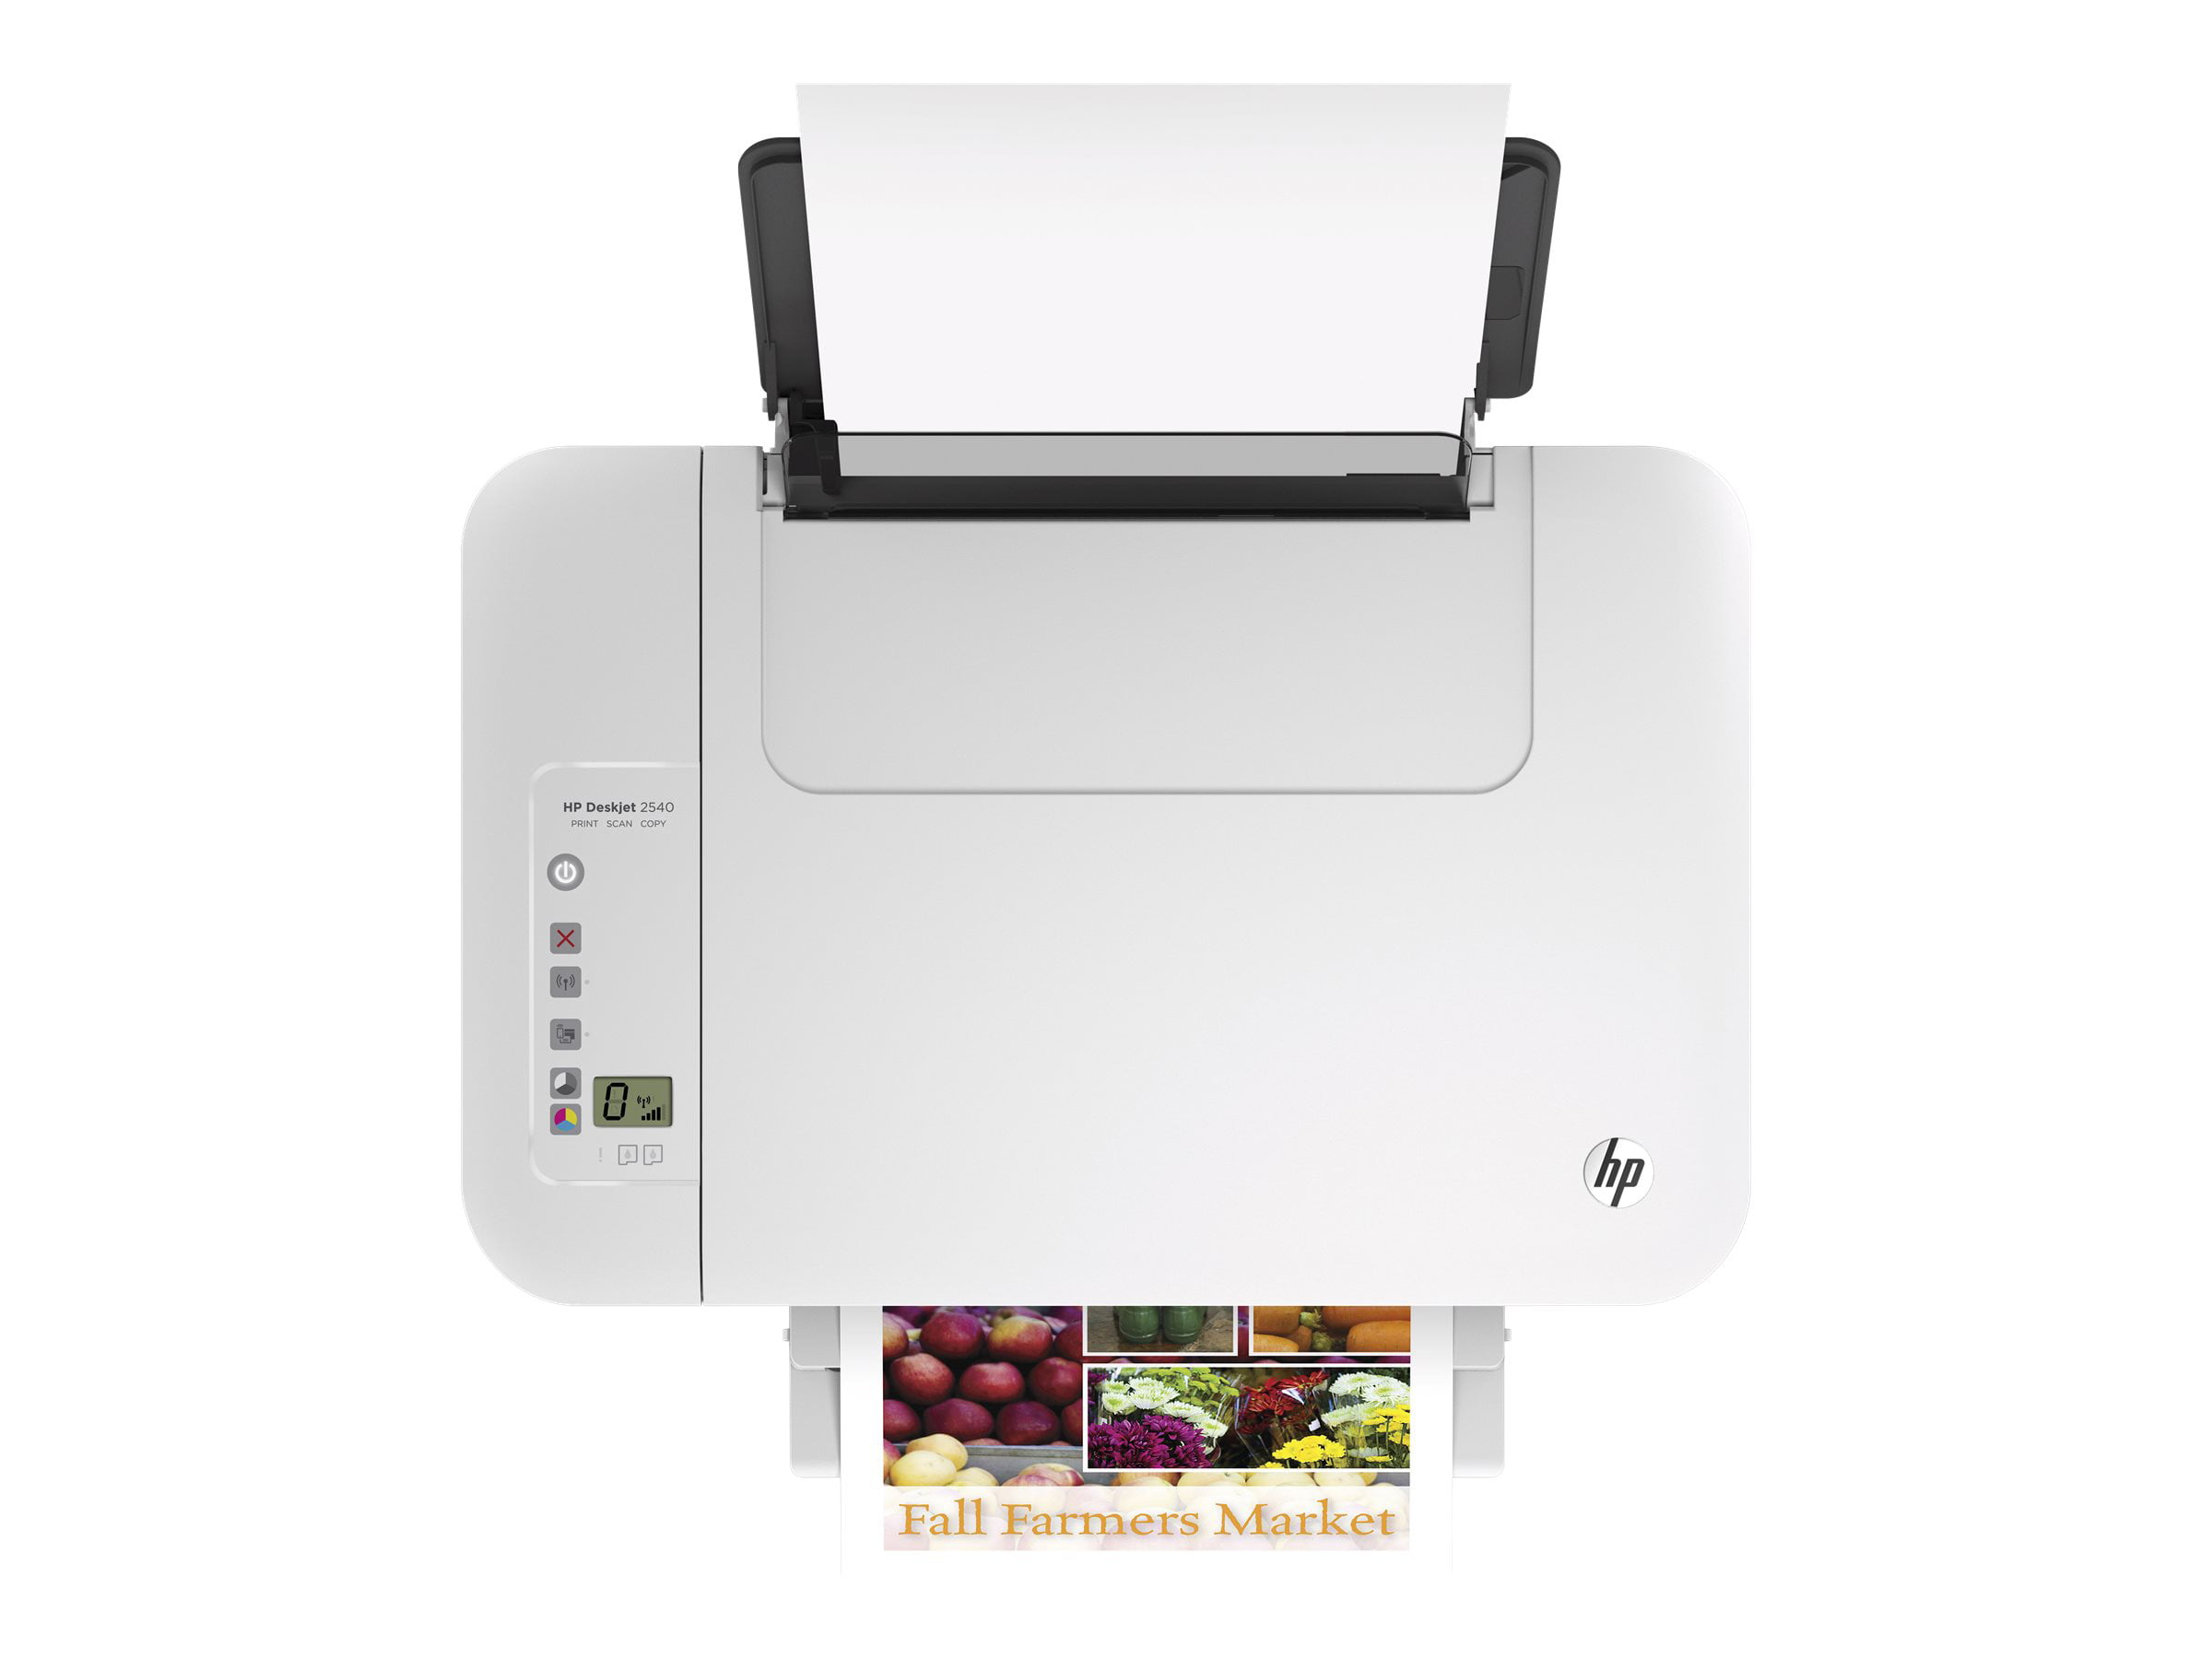 HP Deskjet 2547 All-in-One Printer - Specifications